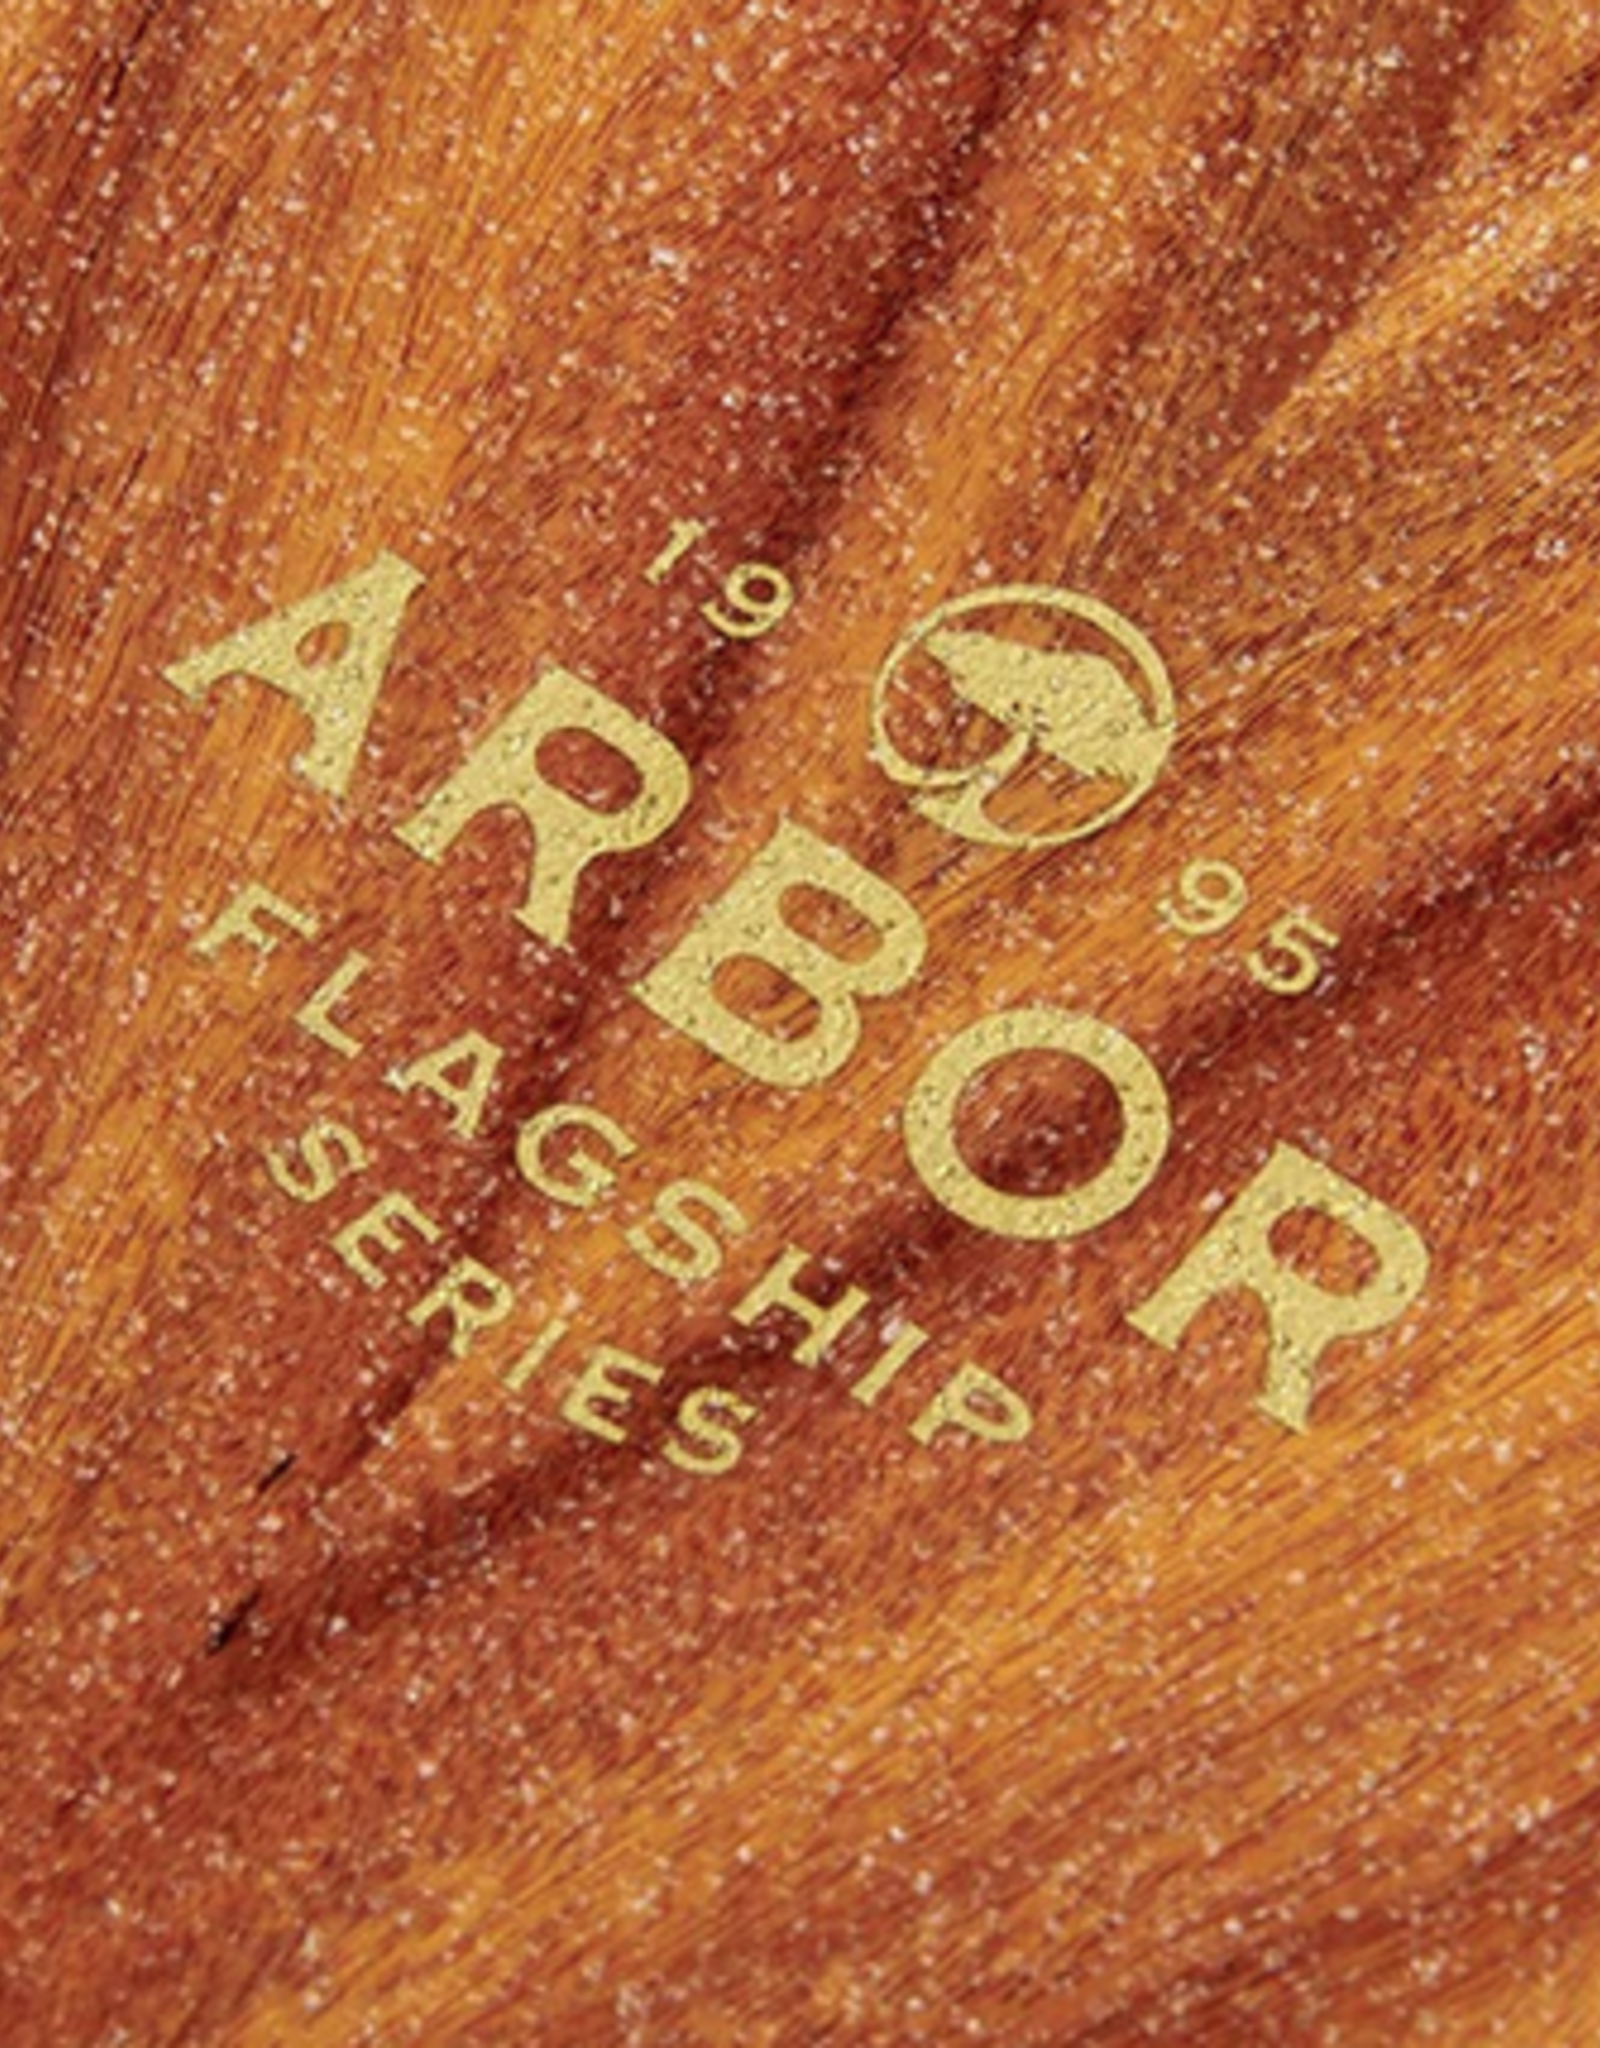 ARBOR ARBOR FLAGSHIP 40" AXIS LONGBOARD